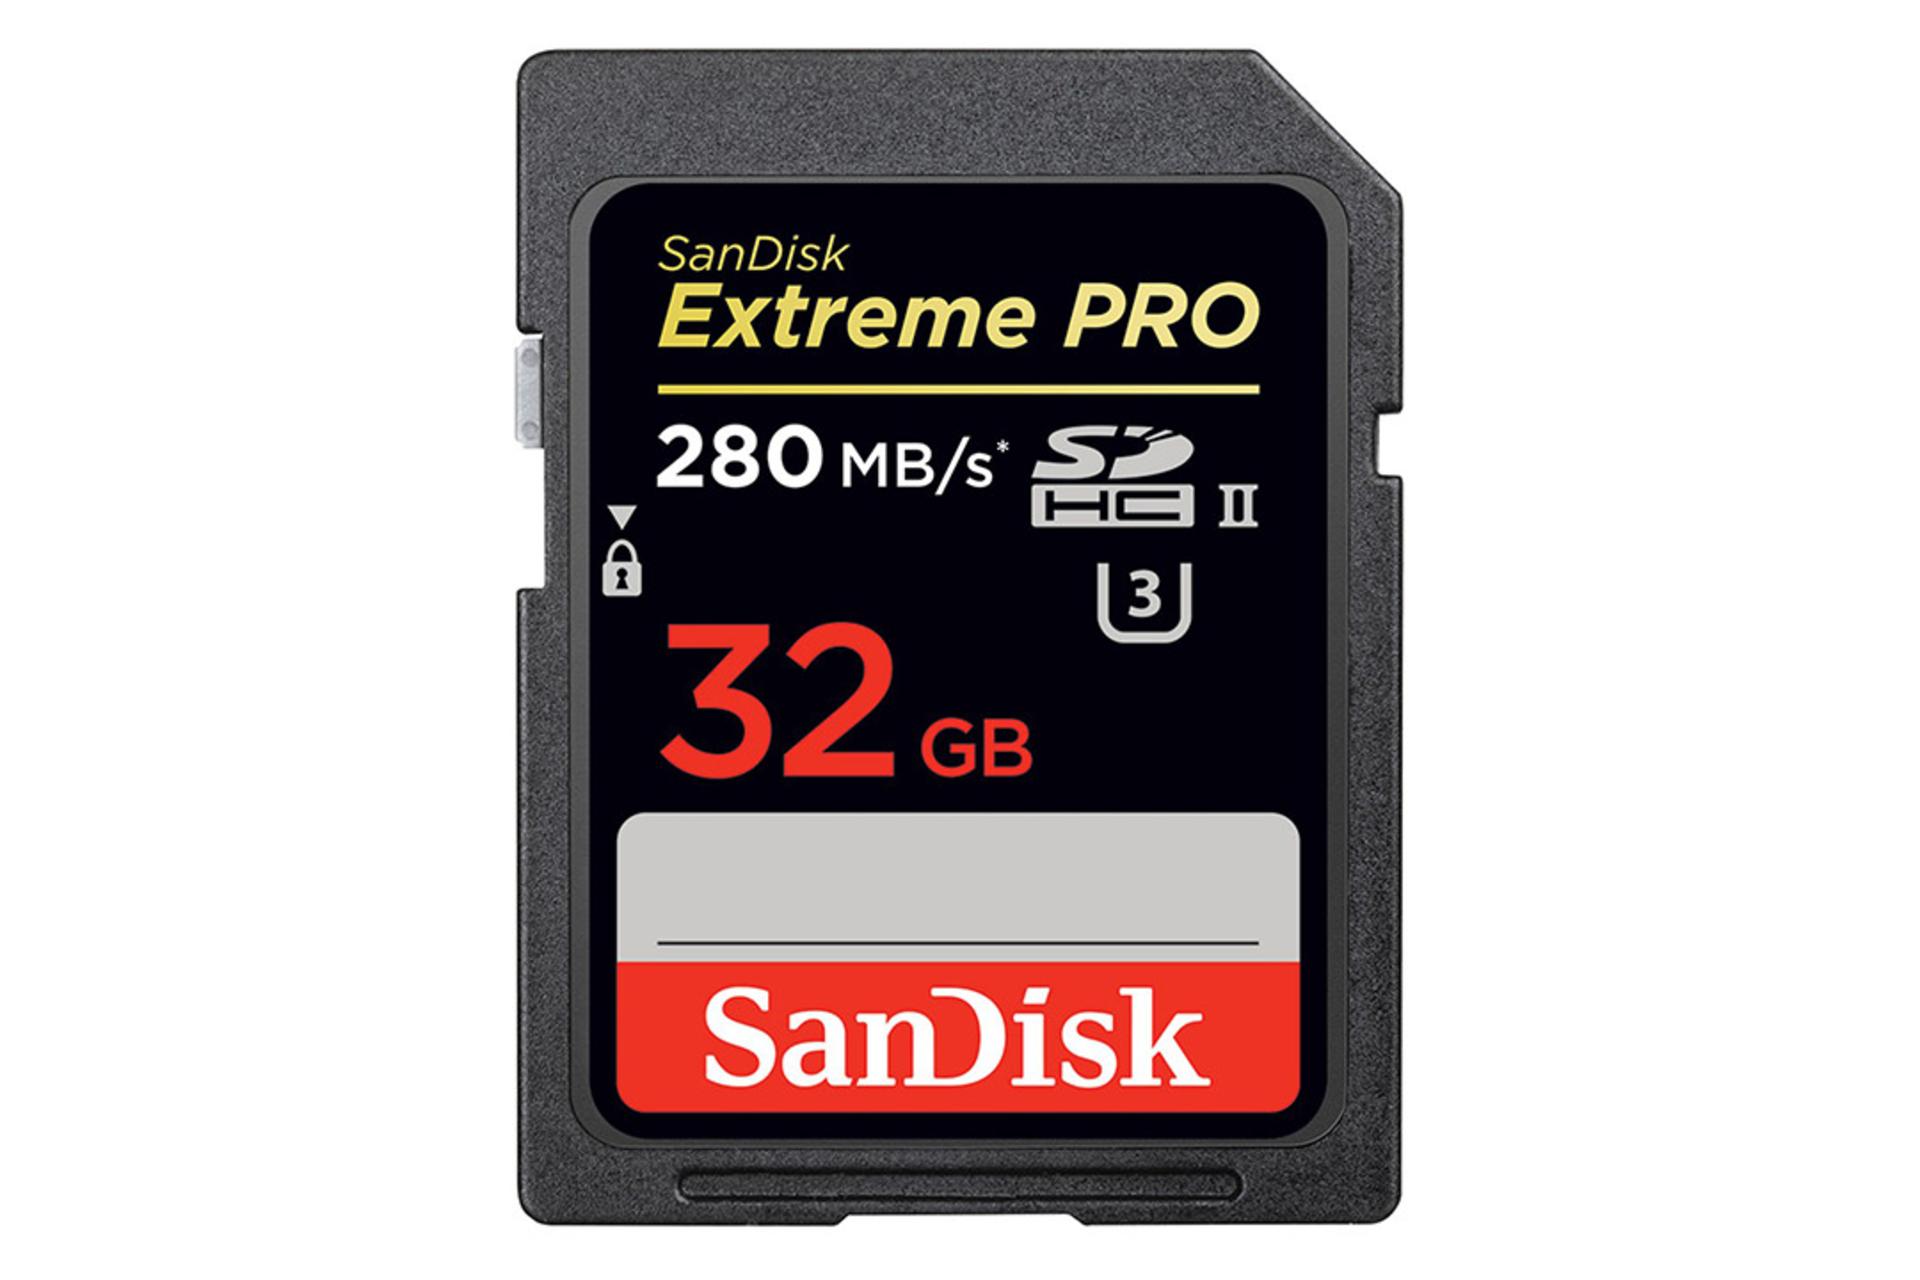 SanDisk Extreme Pro microSDHC Class 10 UHS-II U3 32GB